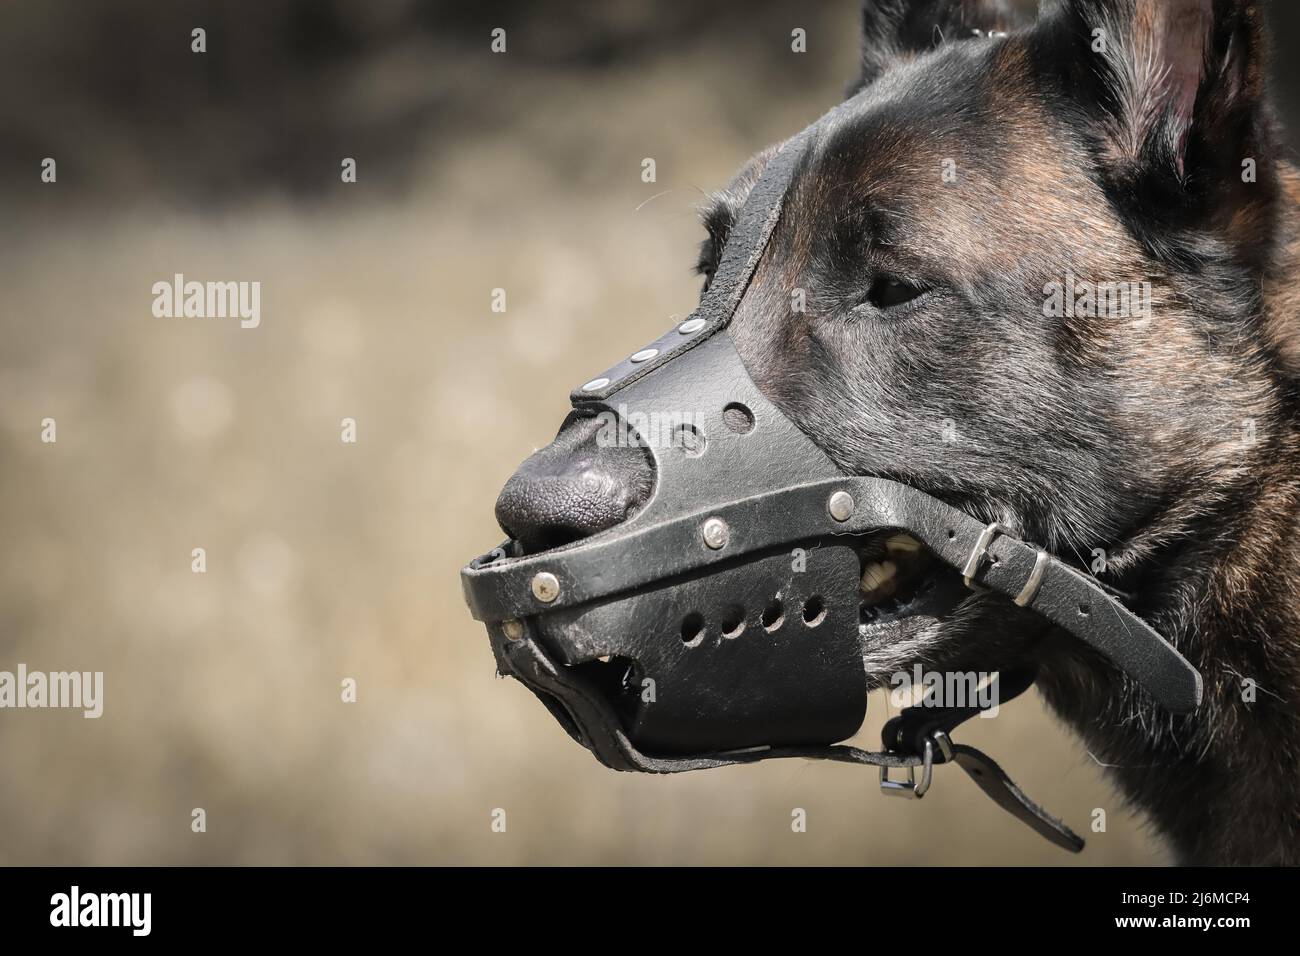 malinois belgian shepherd dog head with muzzle for protection Stock Photo